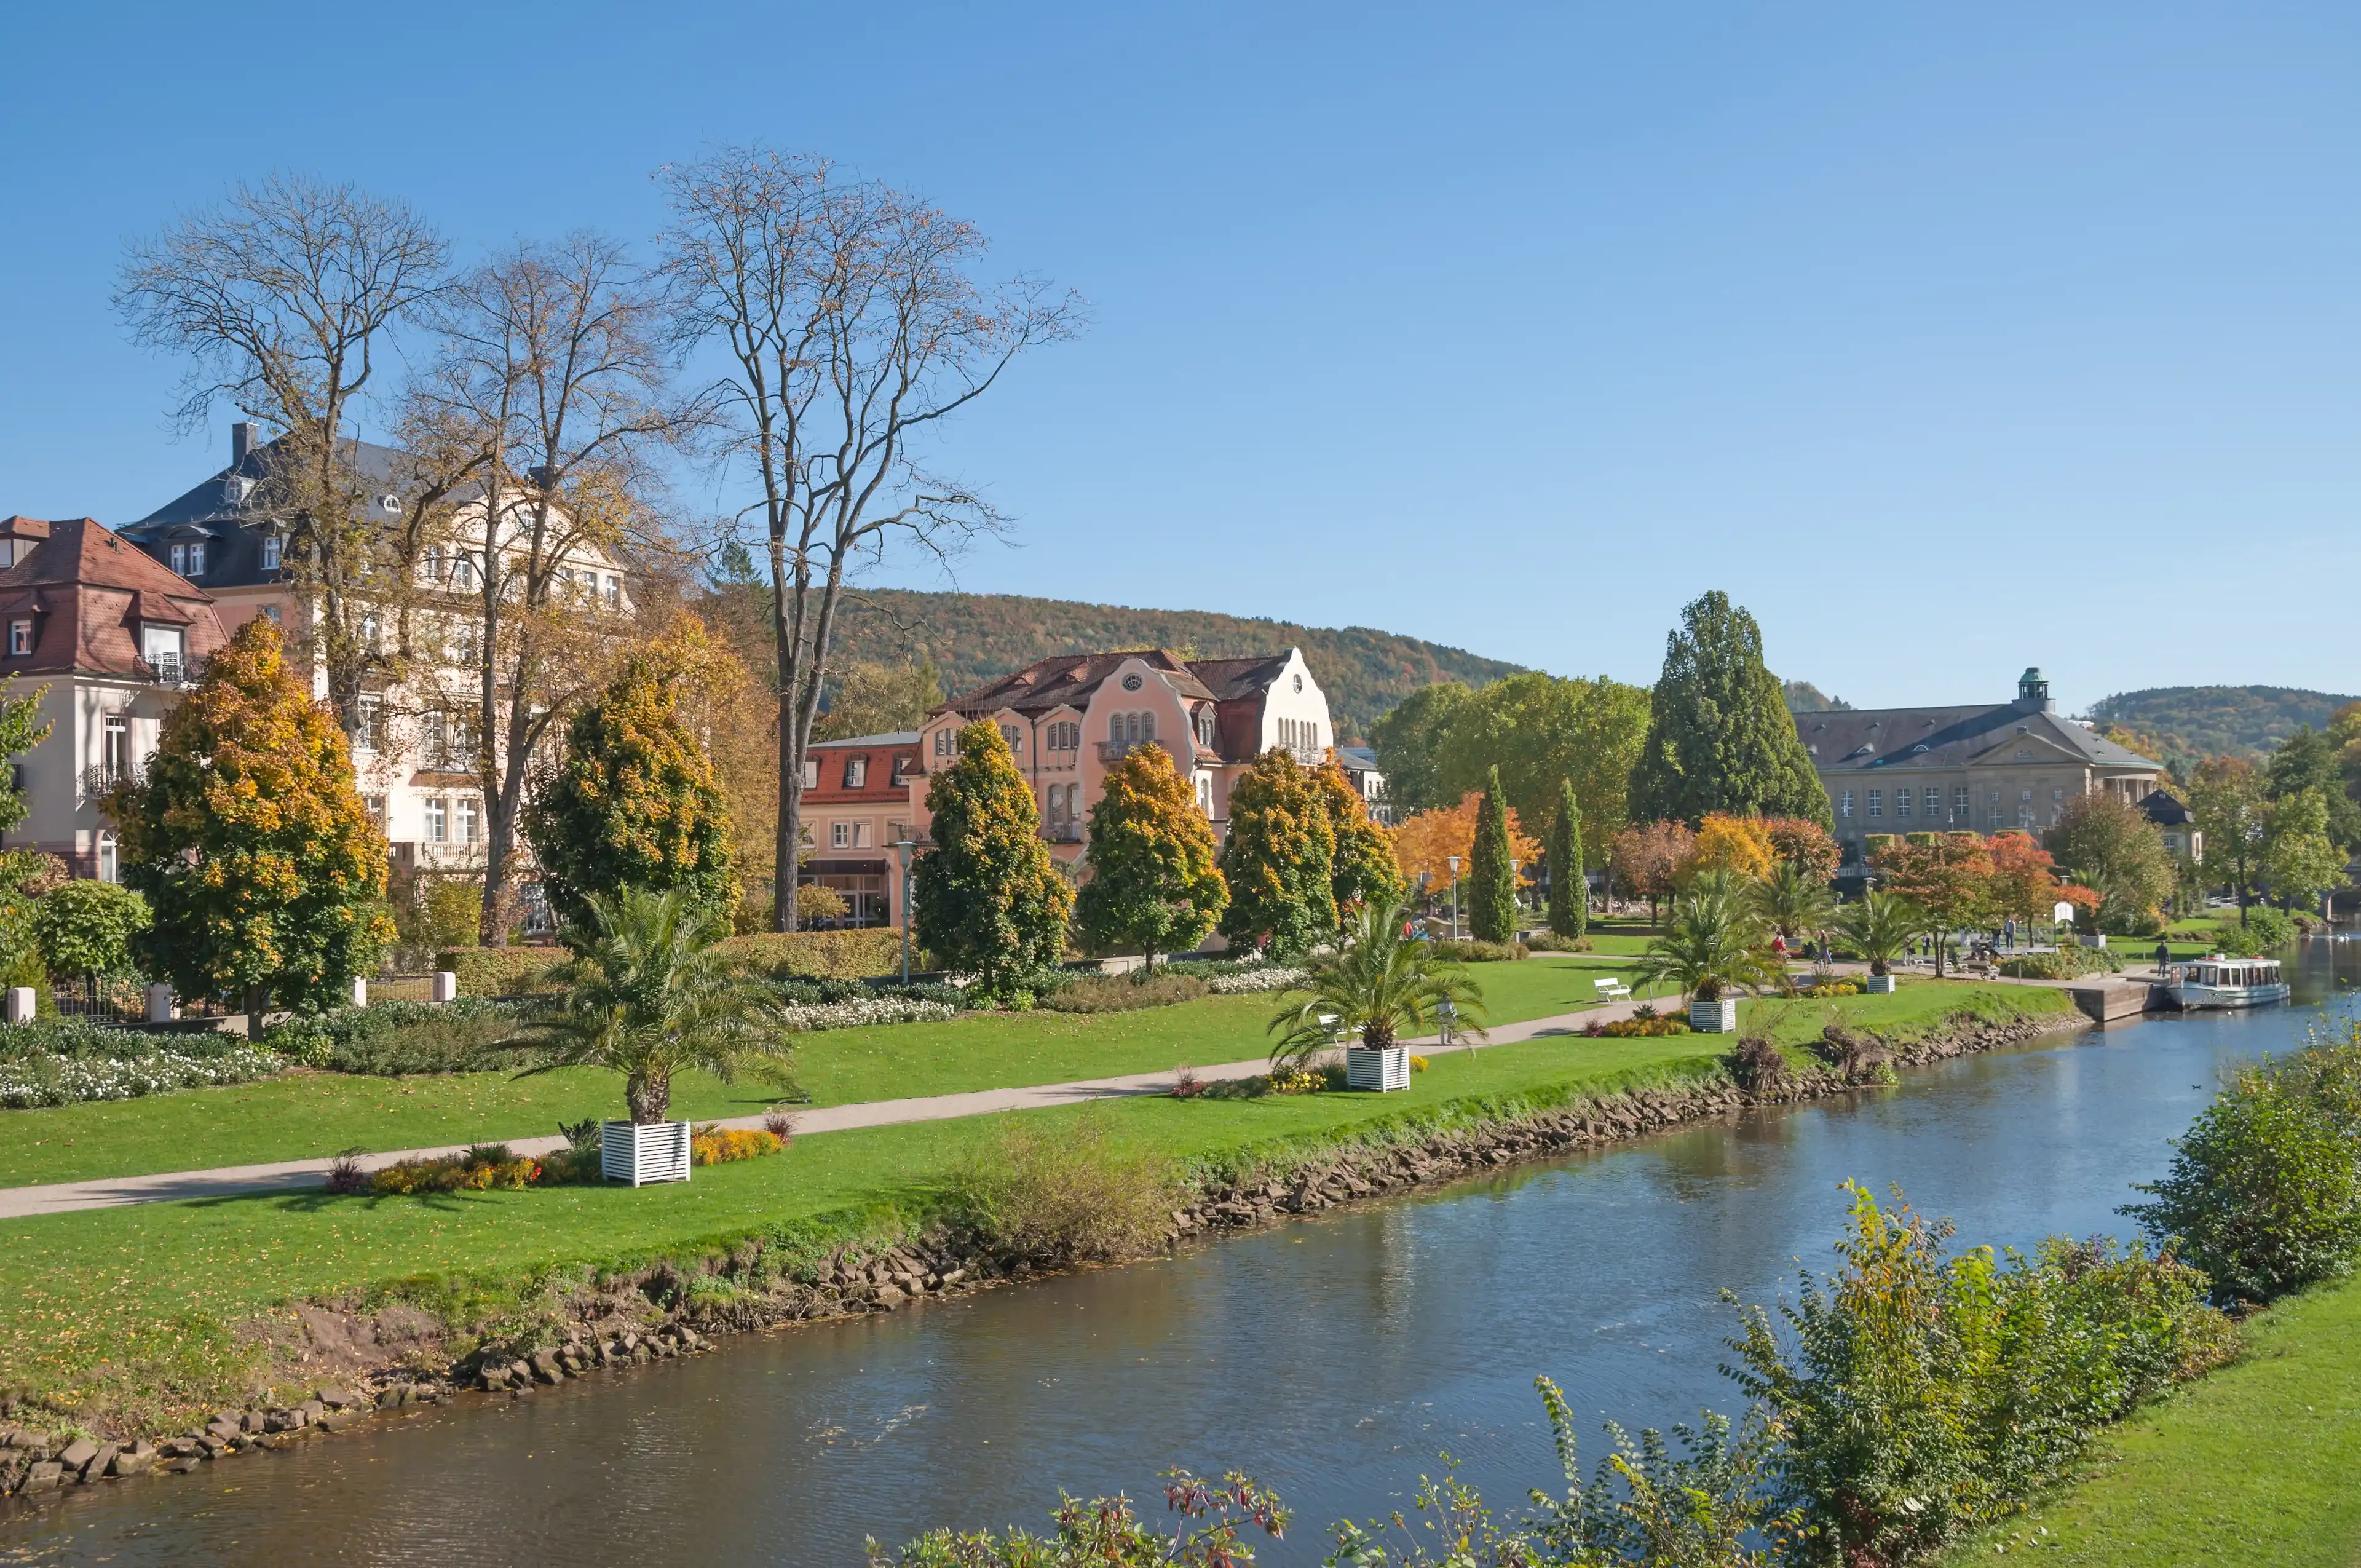 Best Bad Kissingen hotels. Cheap hotels in Bad Kissingen, Germany